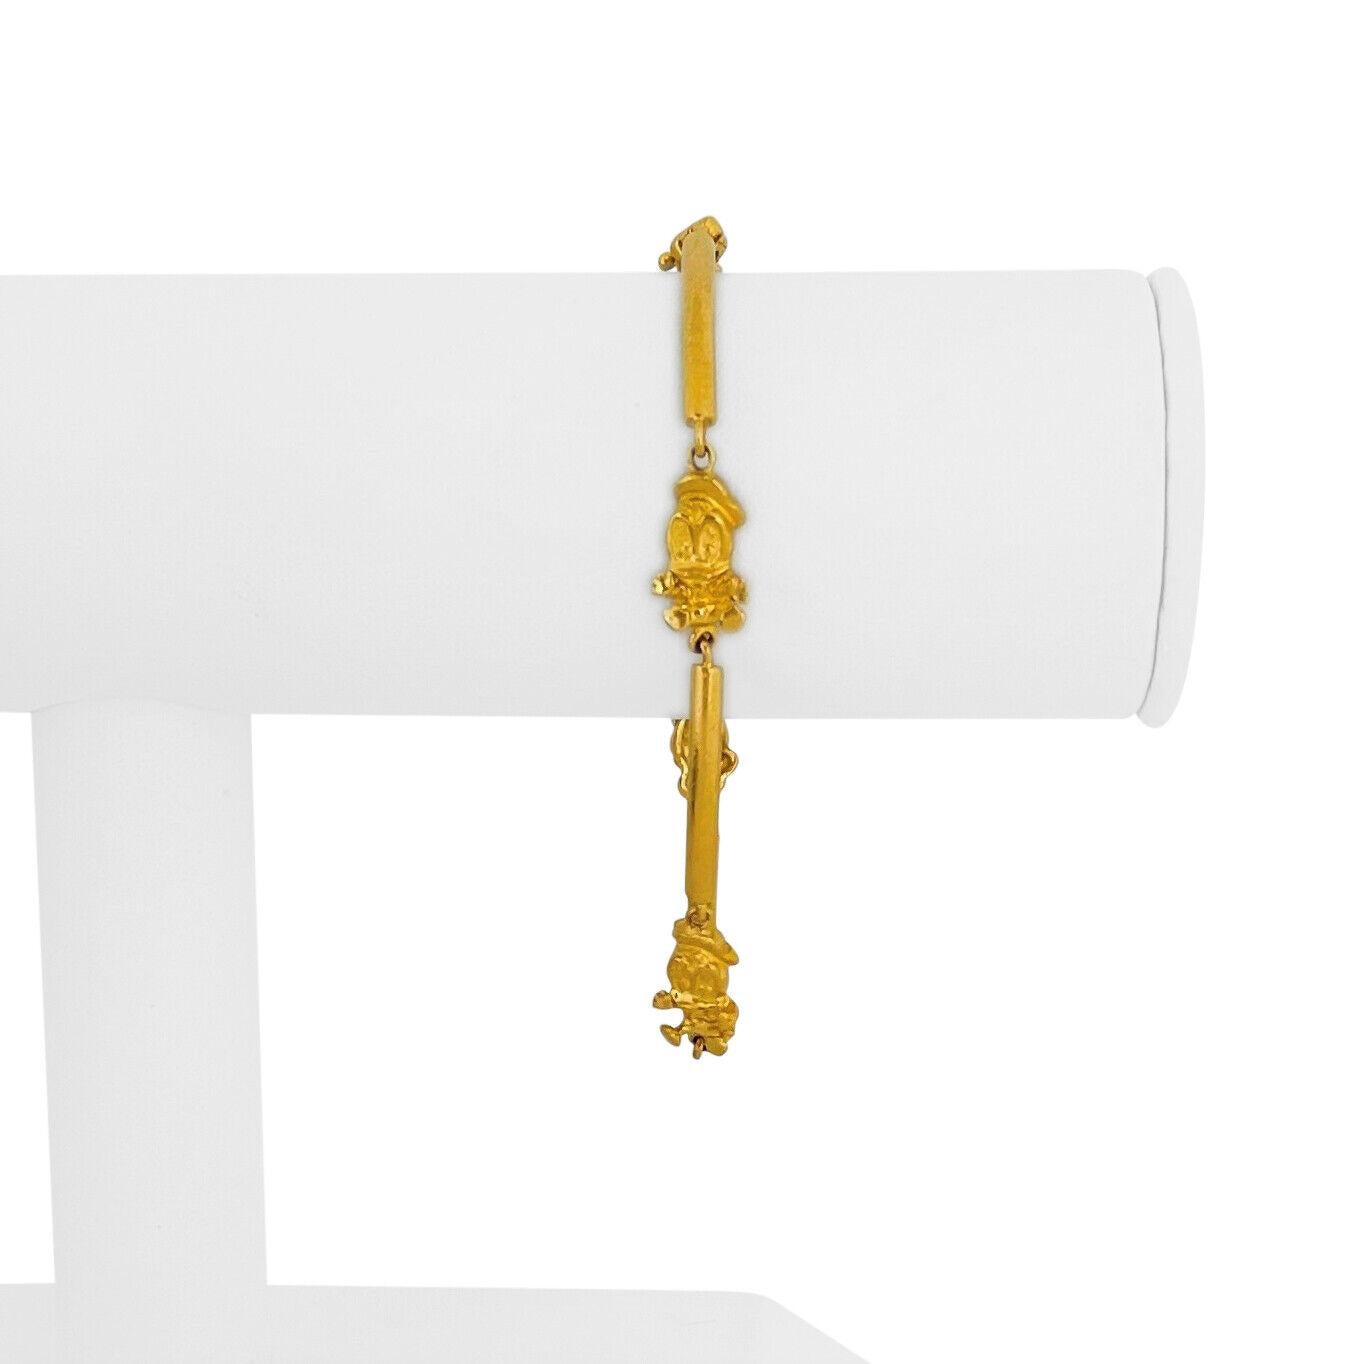 24k Pure Yellow Gold 14.5g Solid Disney Donald Duck Charm Bar Link Bracelet 7